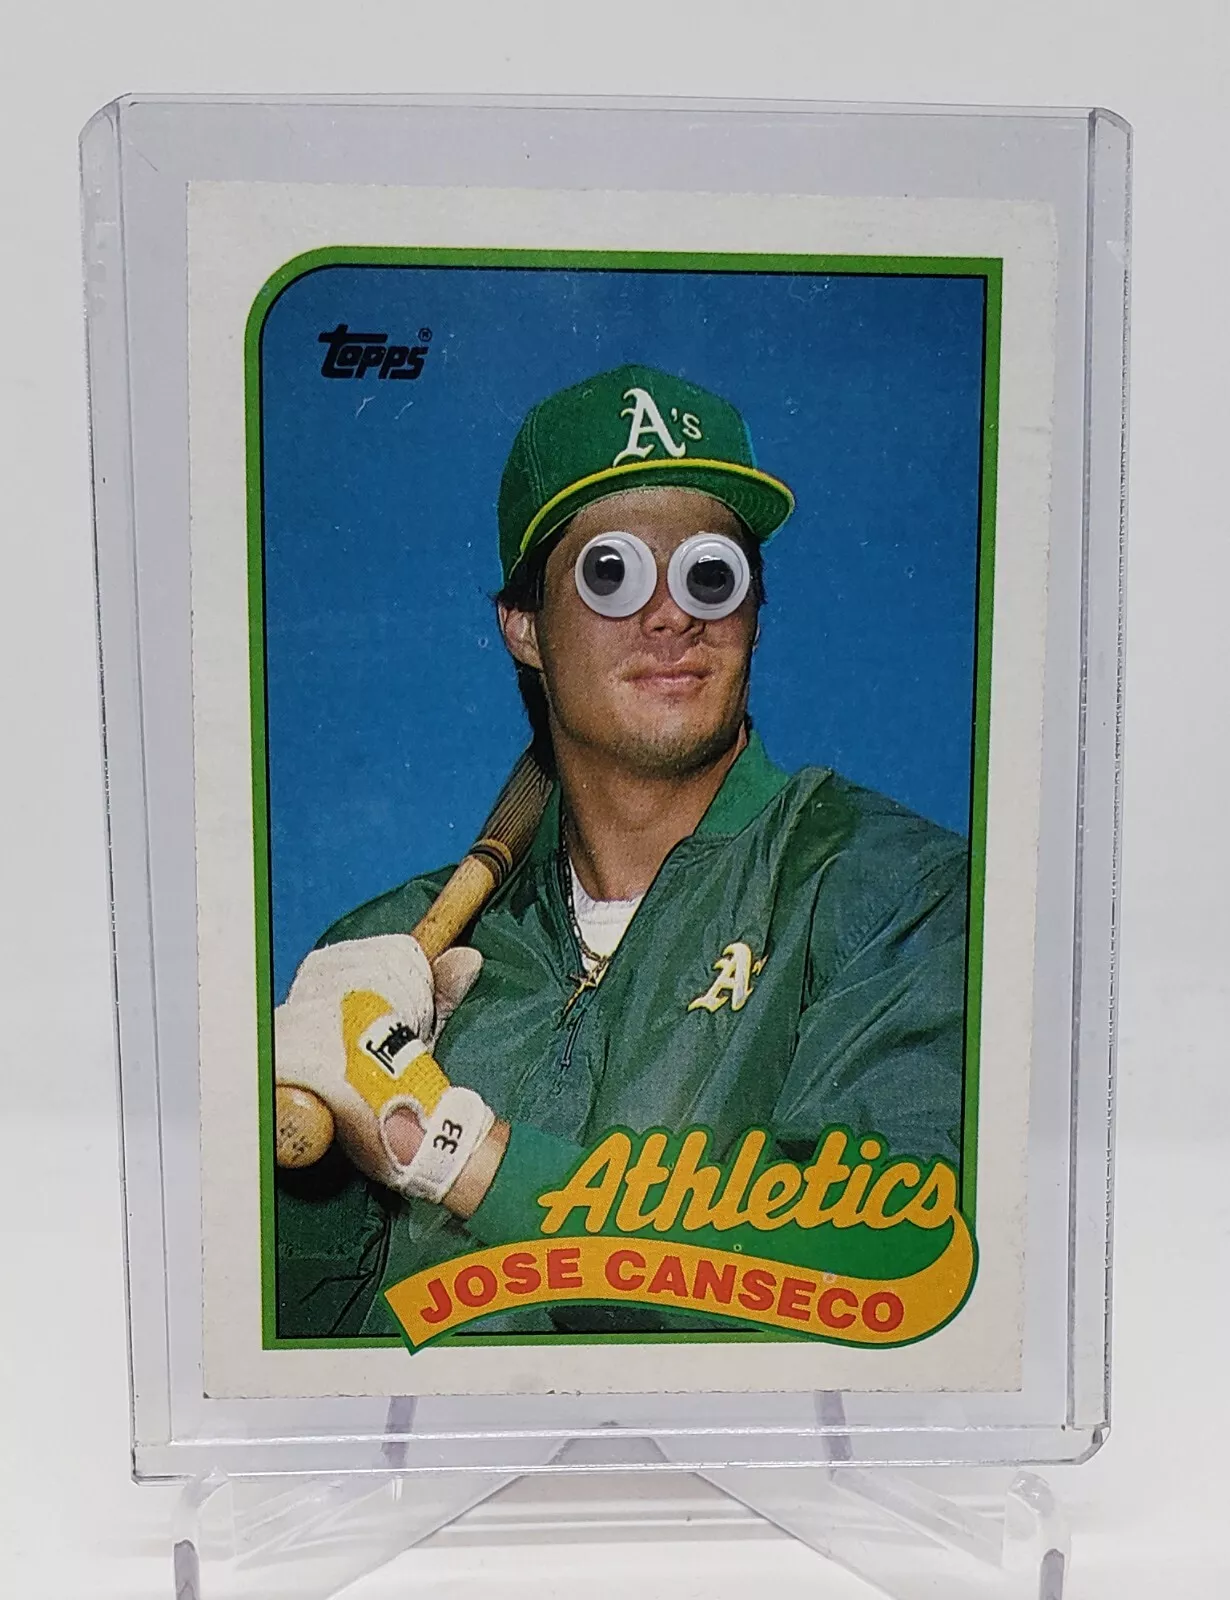 1989 Topps Jose Canseco Quadruple Error Misprint Card #500 Rare ebay 1/1 - Picture 1 of 1